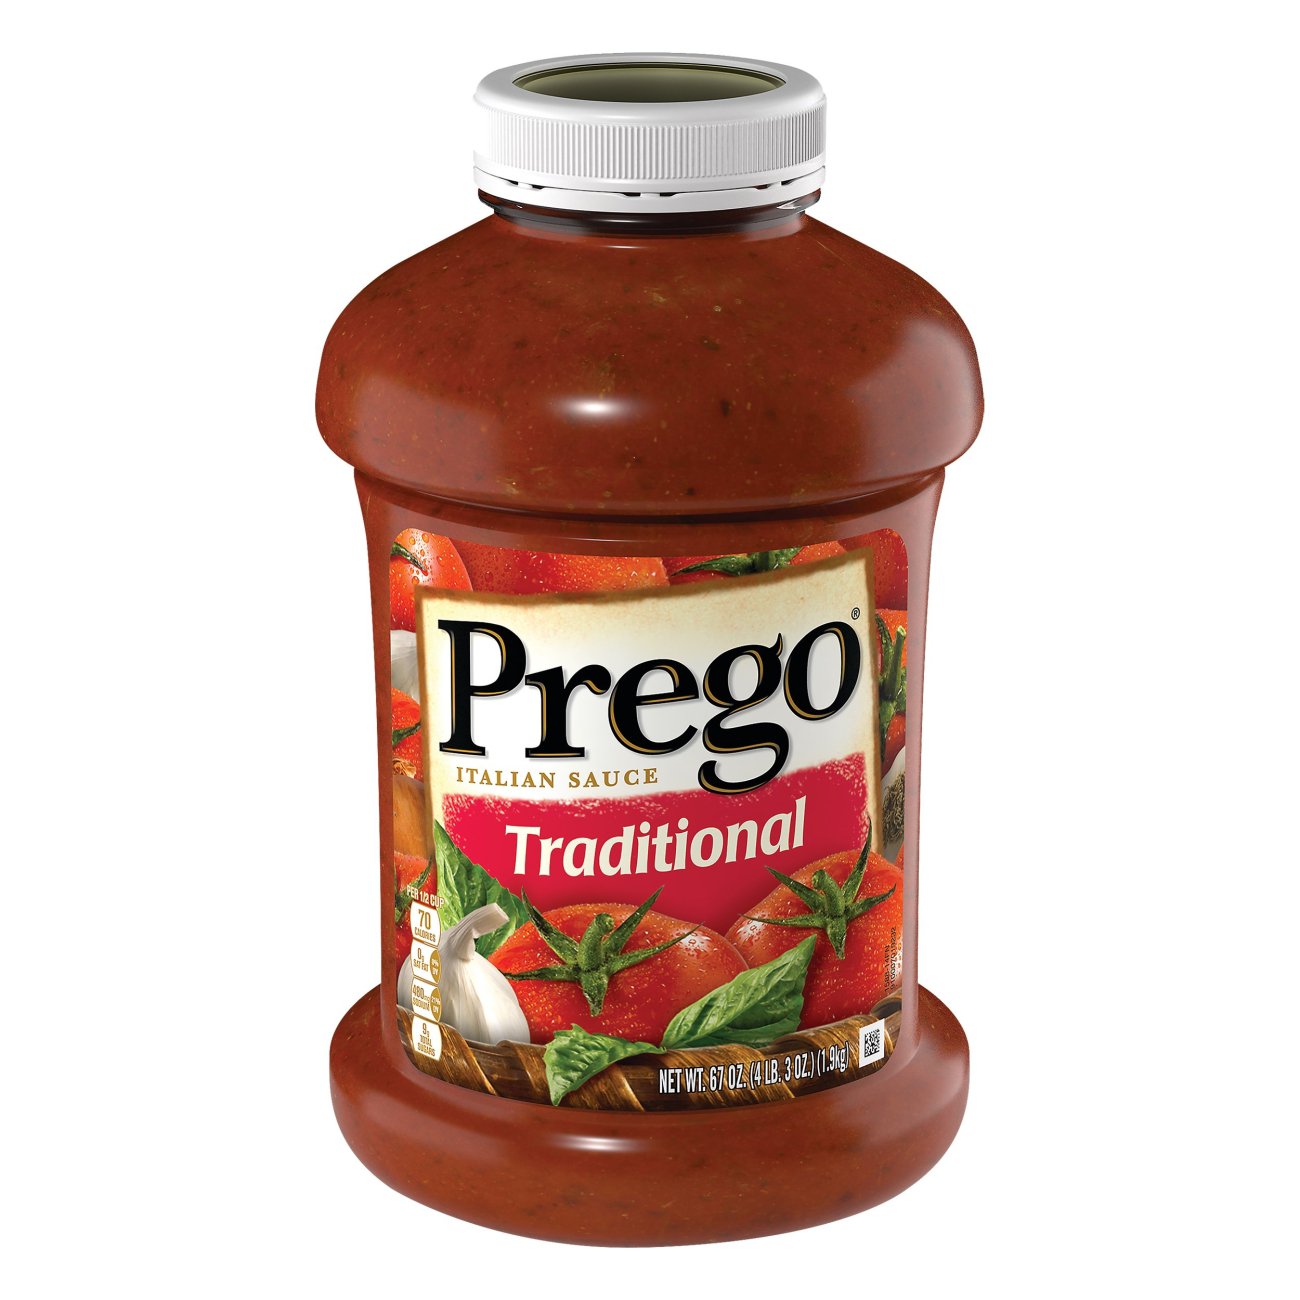 Prego Pasta Sauce Review